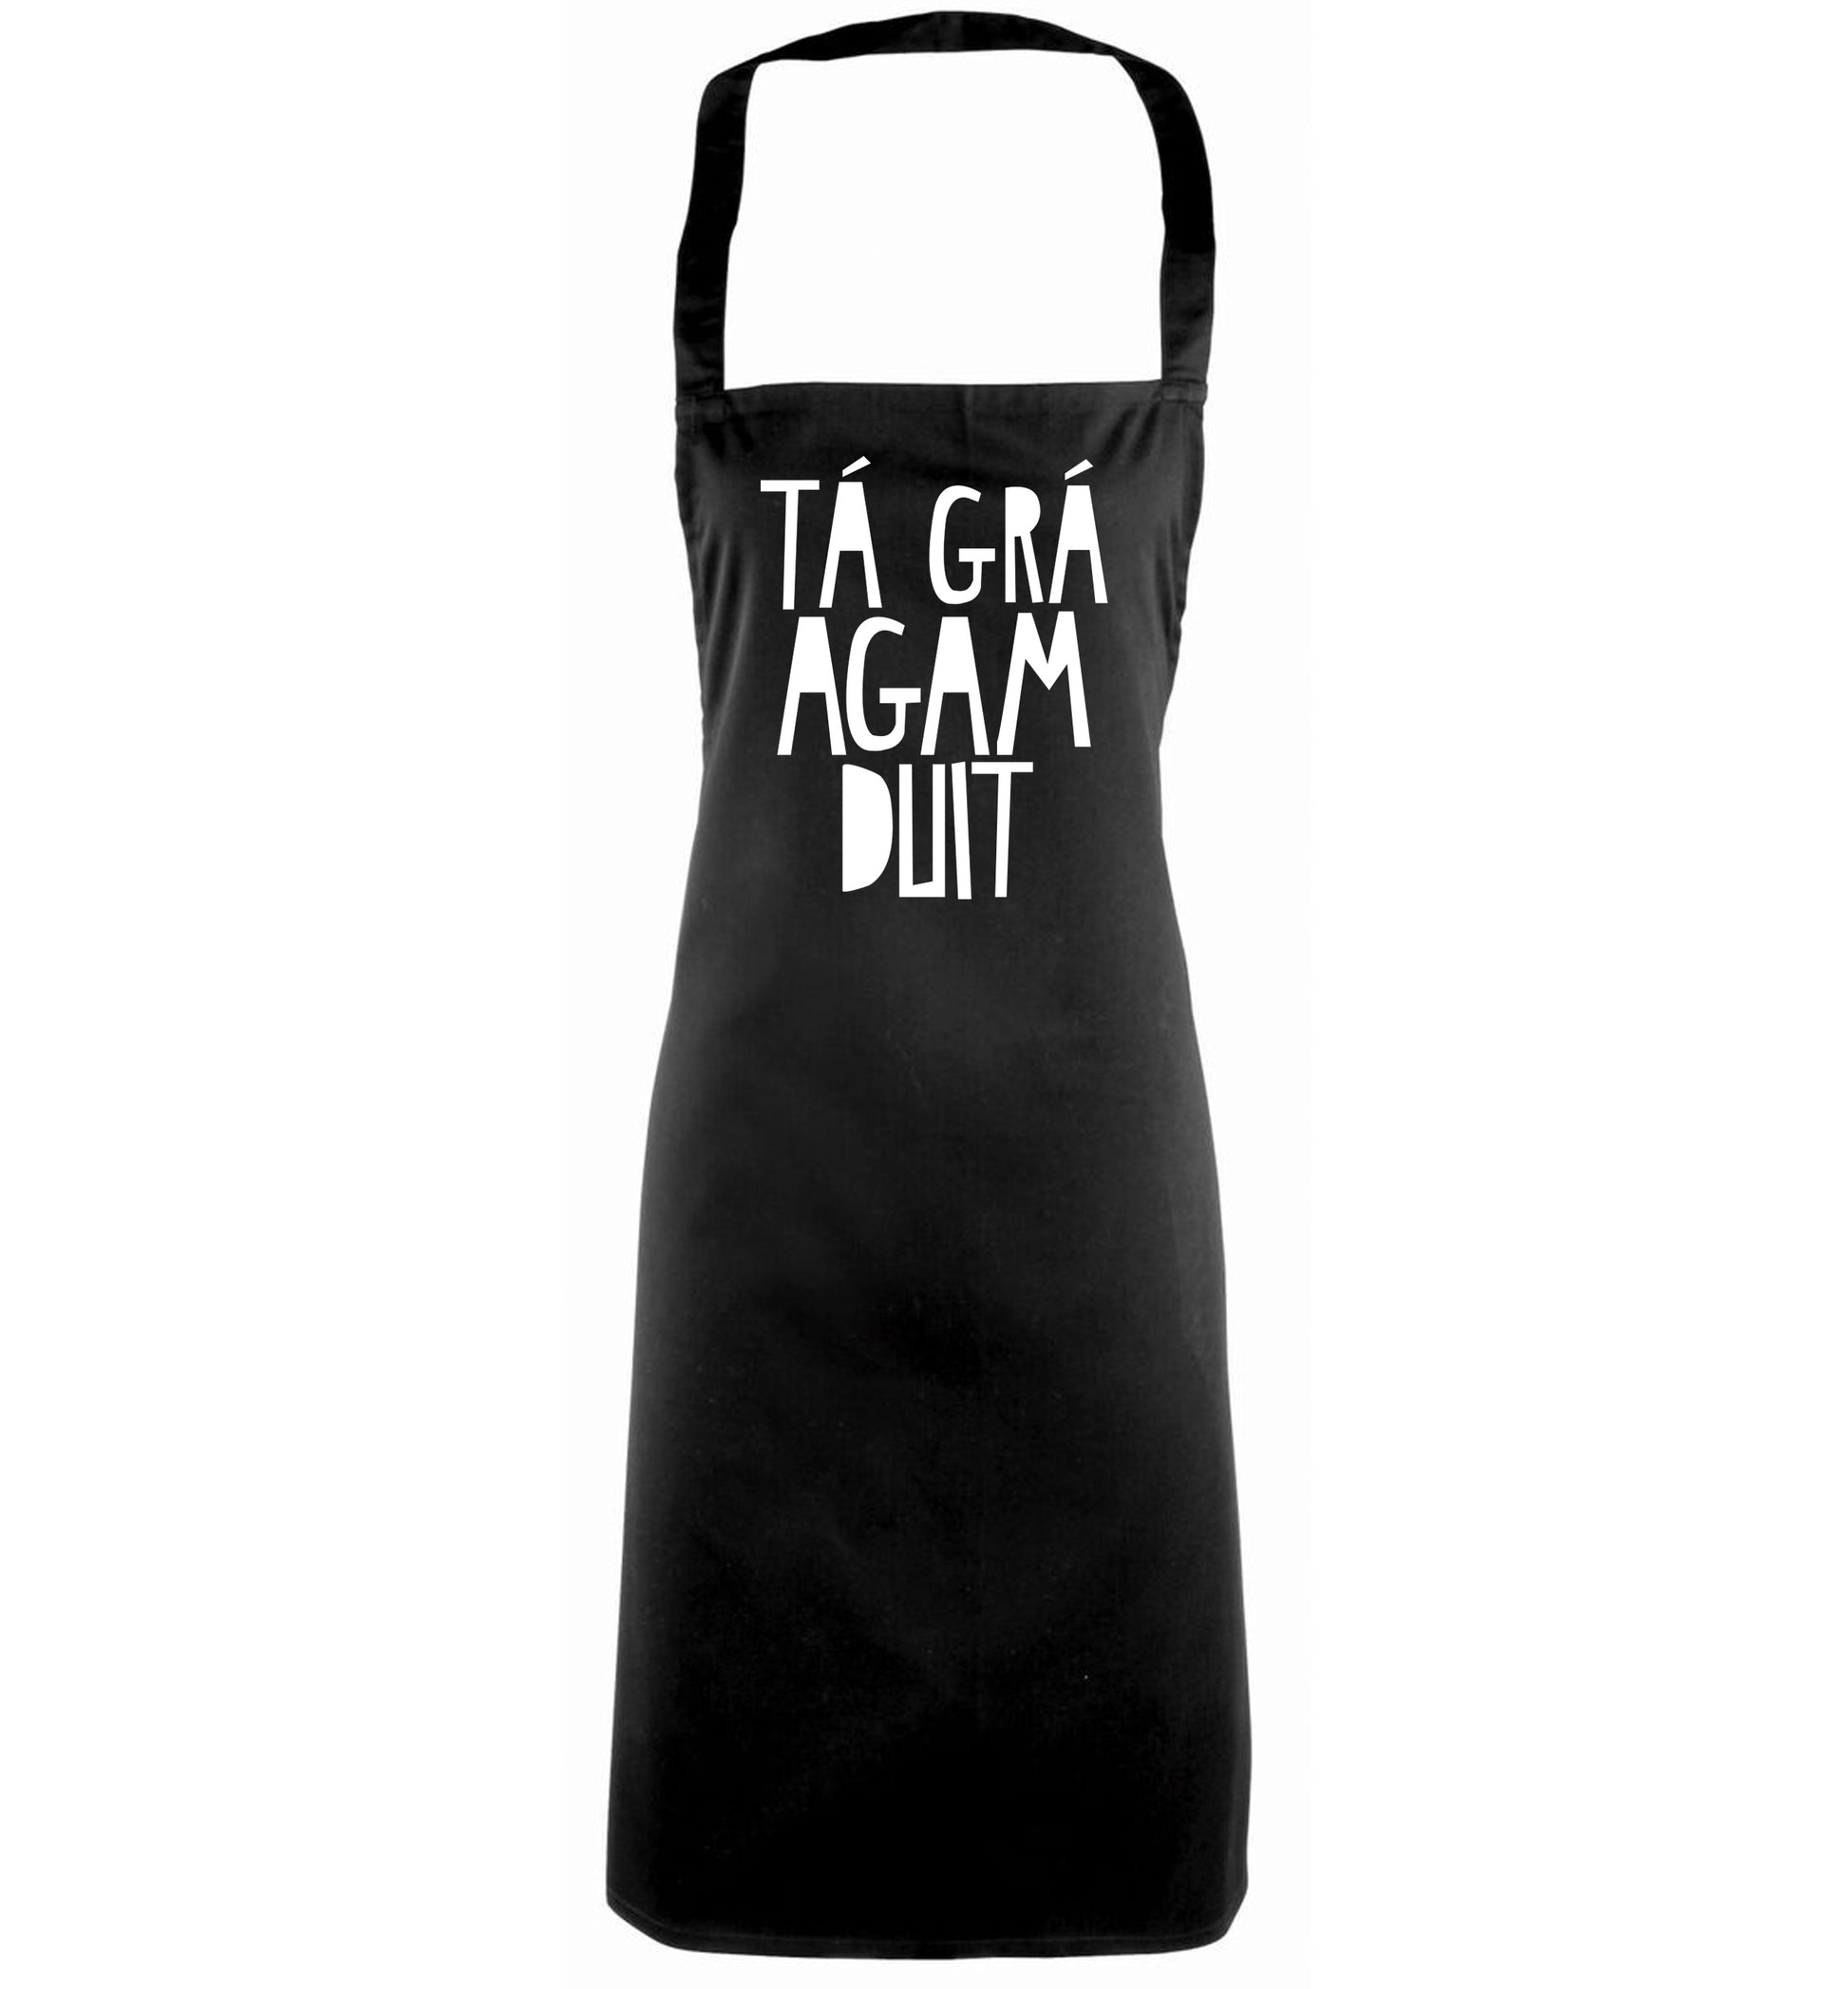 T‡ gr‡ agam duit - I love you black apron